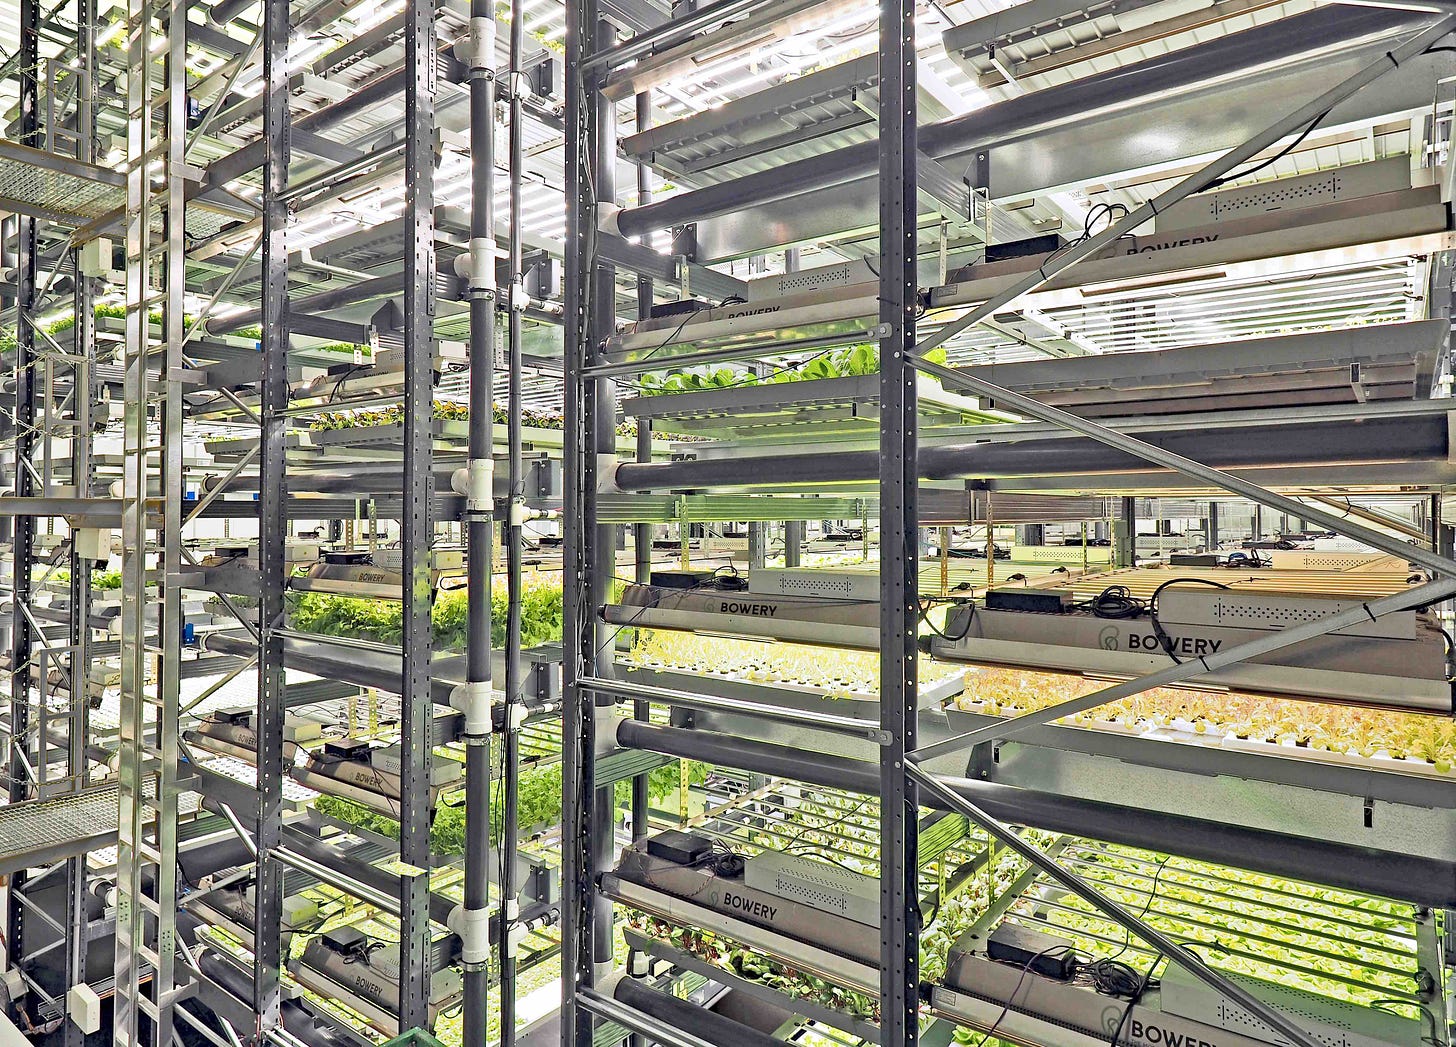 Bowery opens a new vertical farm in Pennsylvania | TechCrunch